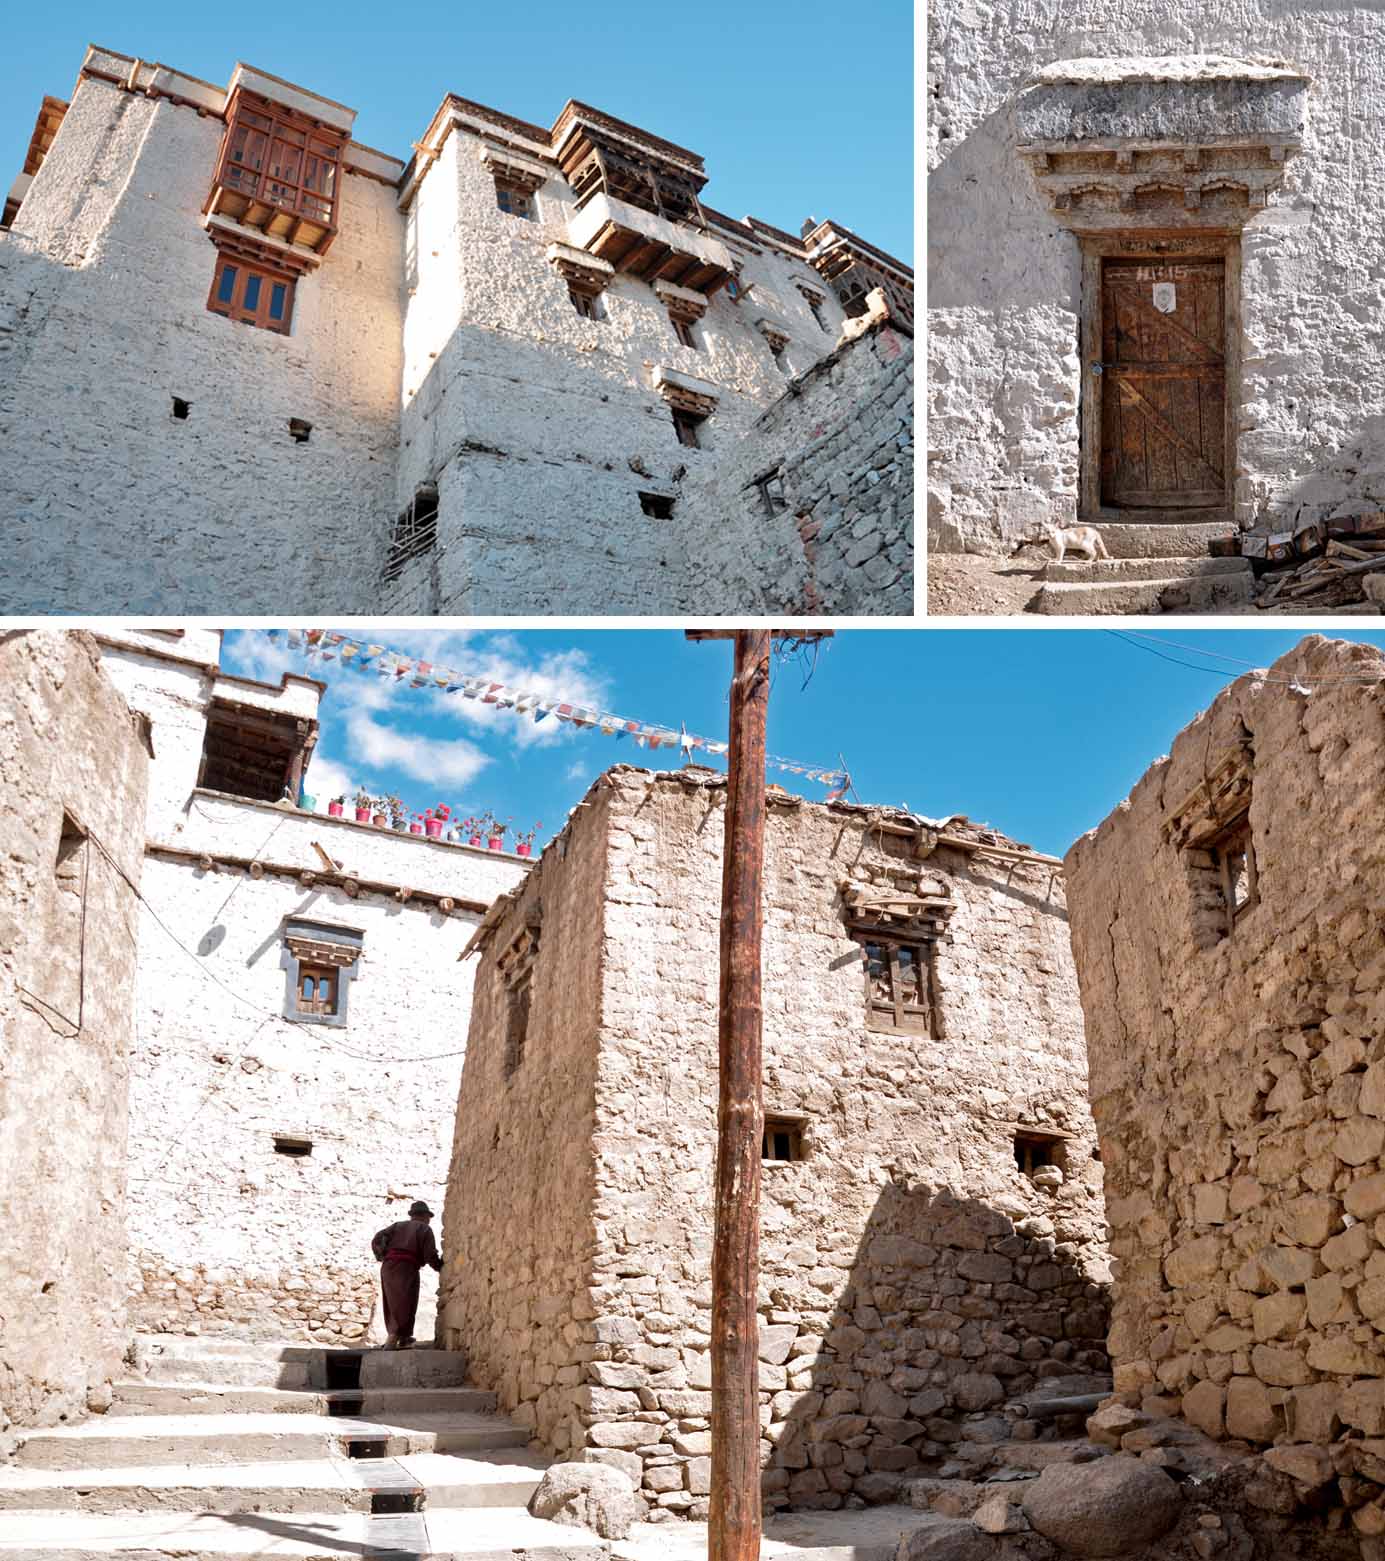 case-regeneration-through-adaptive-reuse-typical-ladakhi-windows-balconies-entrance-ordinary-house-leh-typical-tibetan lintel-showing-stone-masonry-lower-level-adobe-bricks-upper